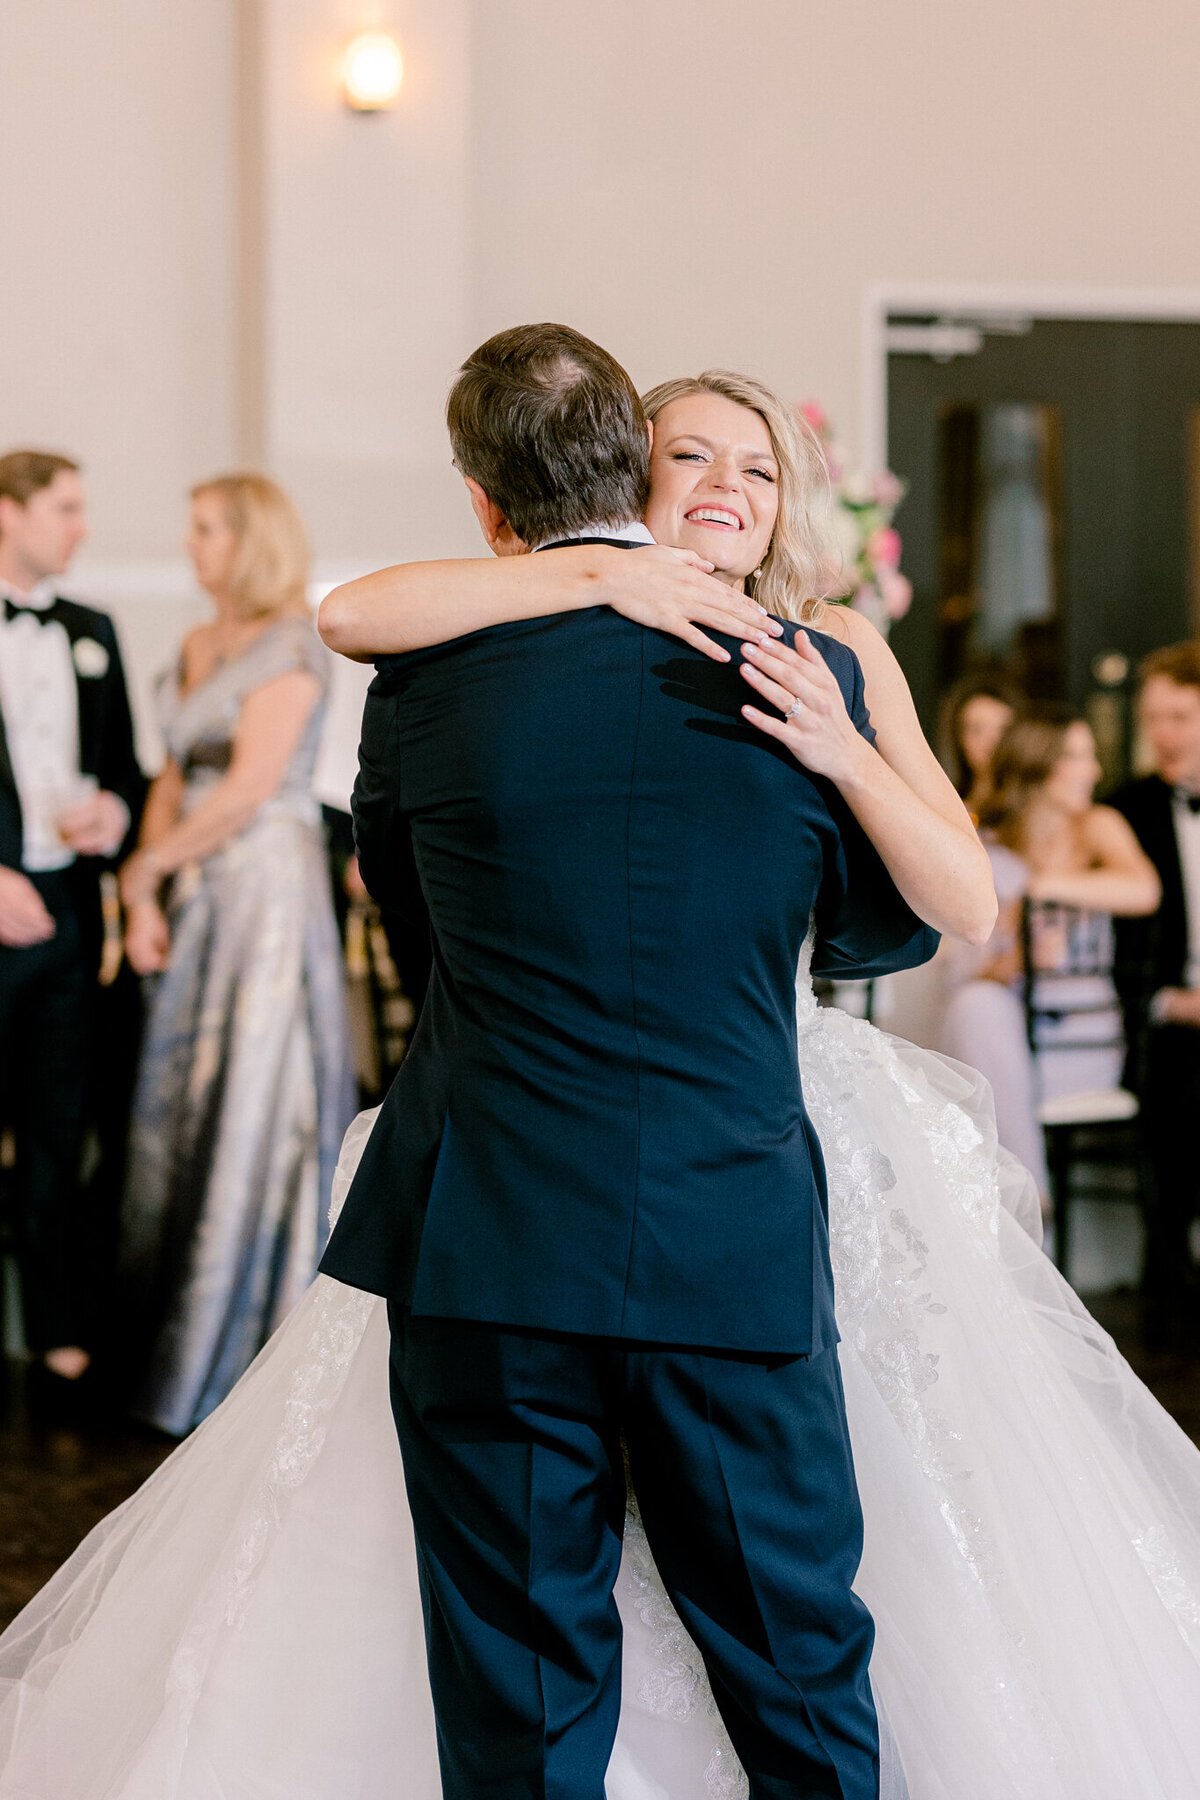 Shelby & Thomas's Wedding at HPUMC The Room on Main | Dallas Wedding Photographer | Sami Kathryn Photography-200